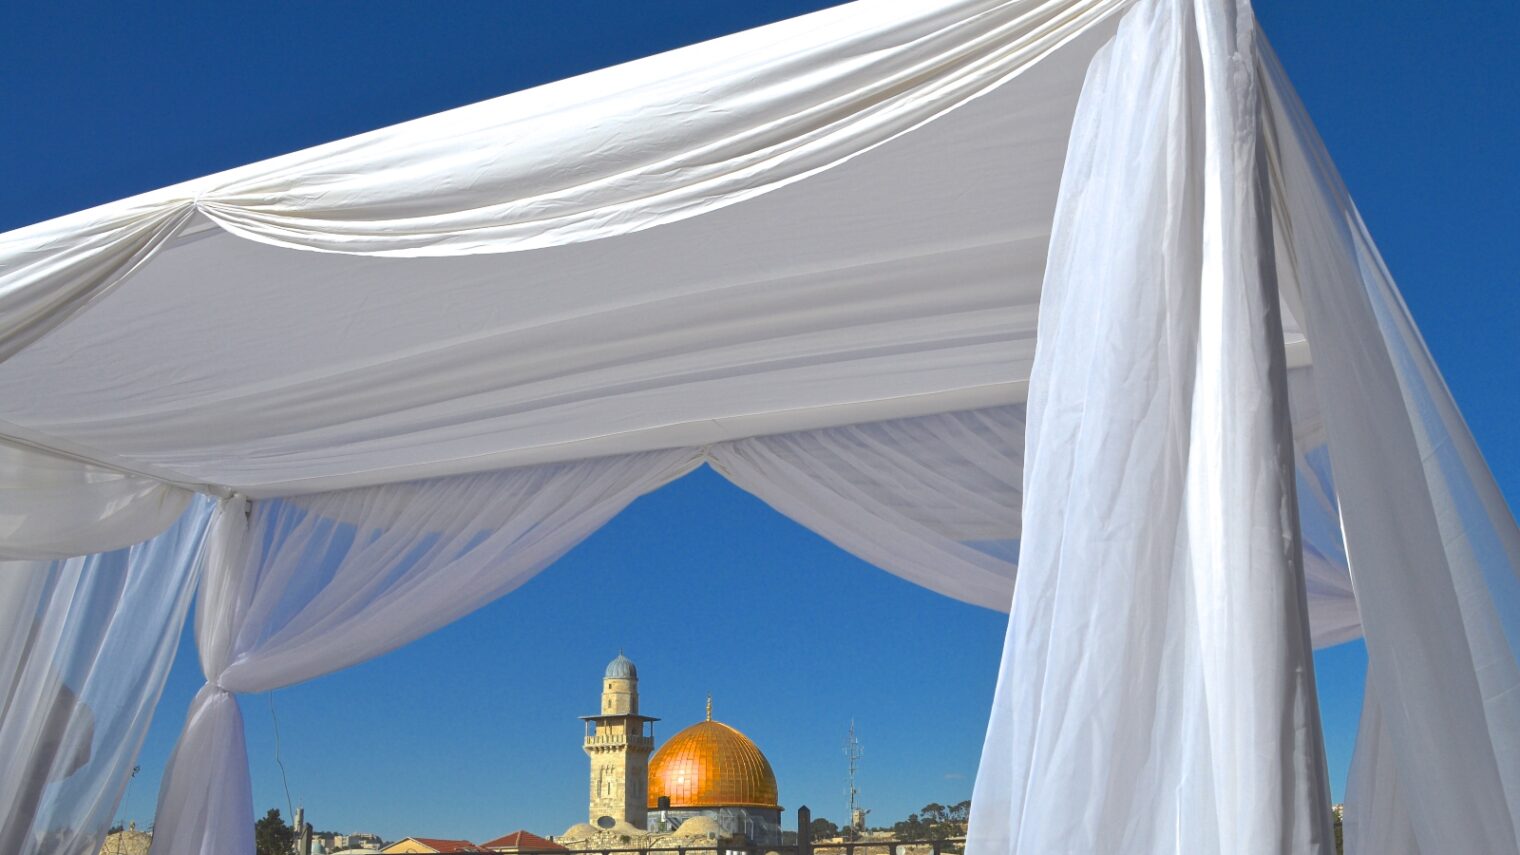 A chuppa (bridal canopy) frames the Dome of the Rock in Jerusalem. Photo by Daniel Santacruz